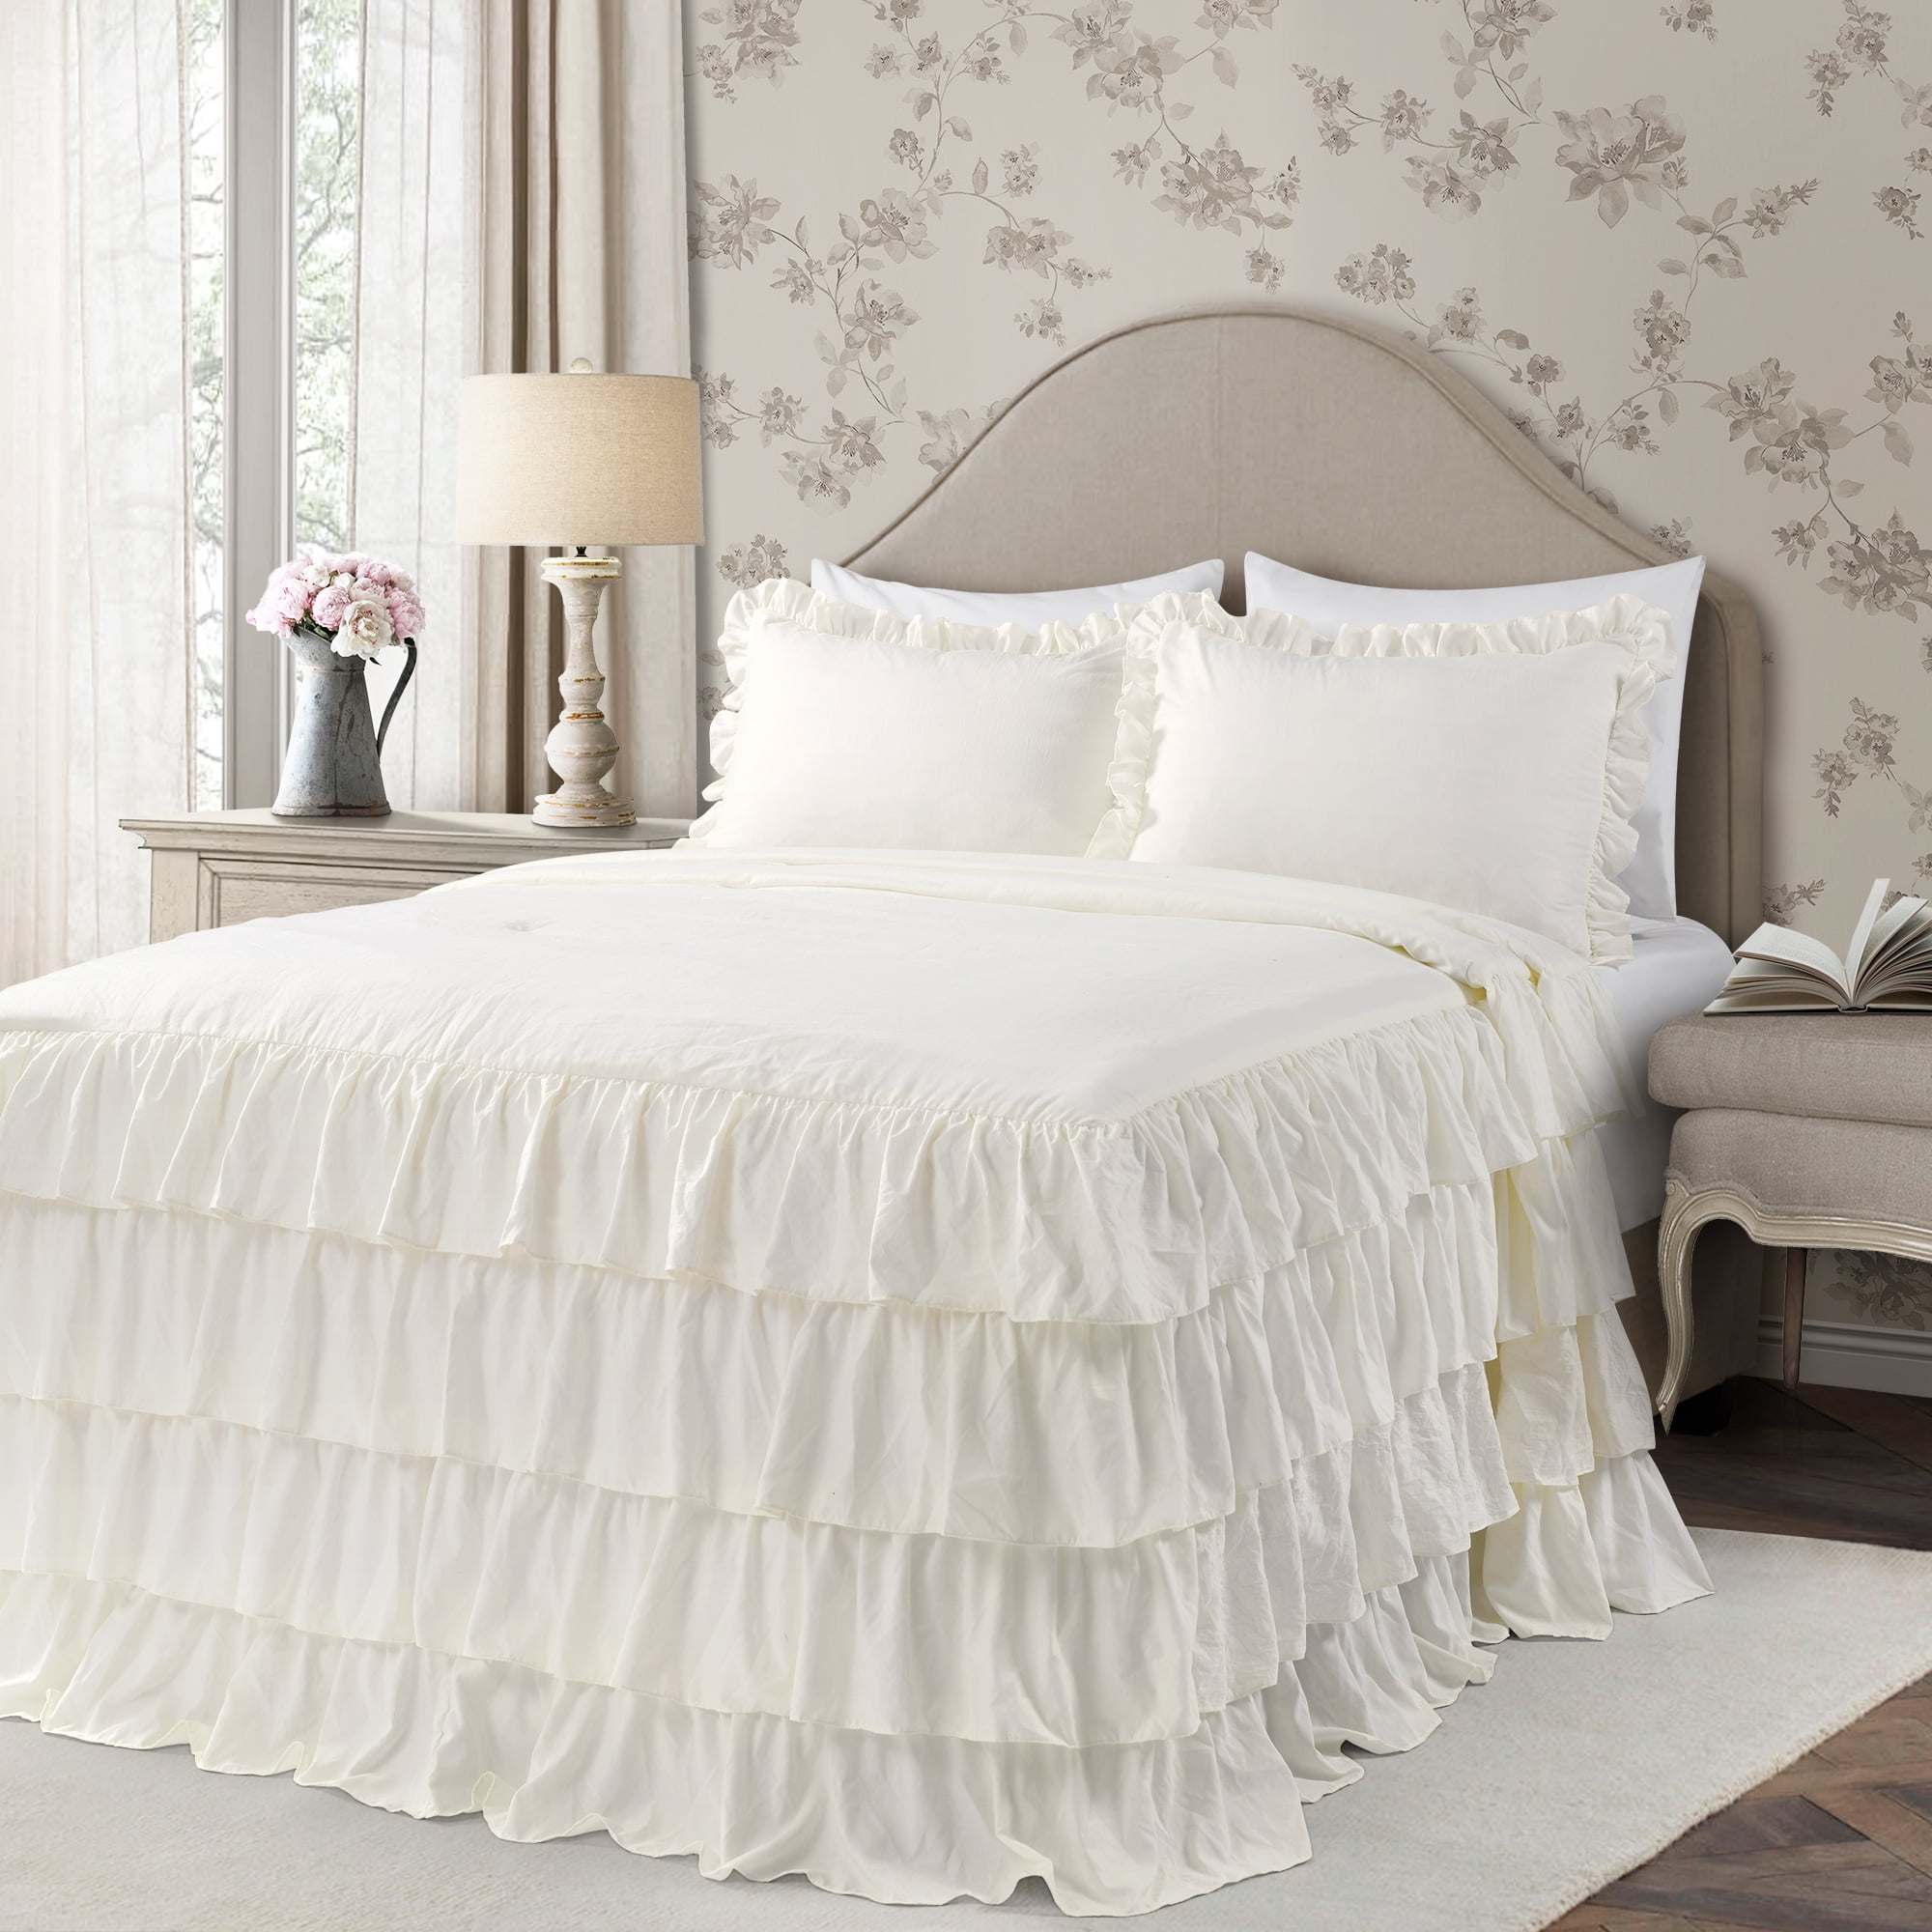 Lush Decor Allison Ruffle Skirt Polyester Bedspread, Queen, Ivory, 3-Pc Set